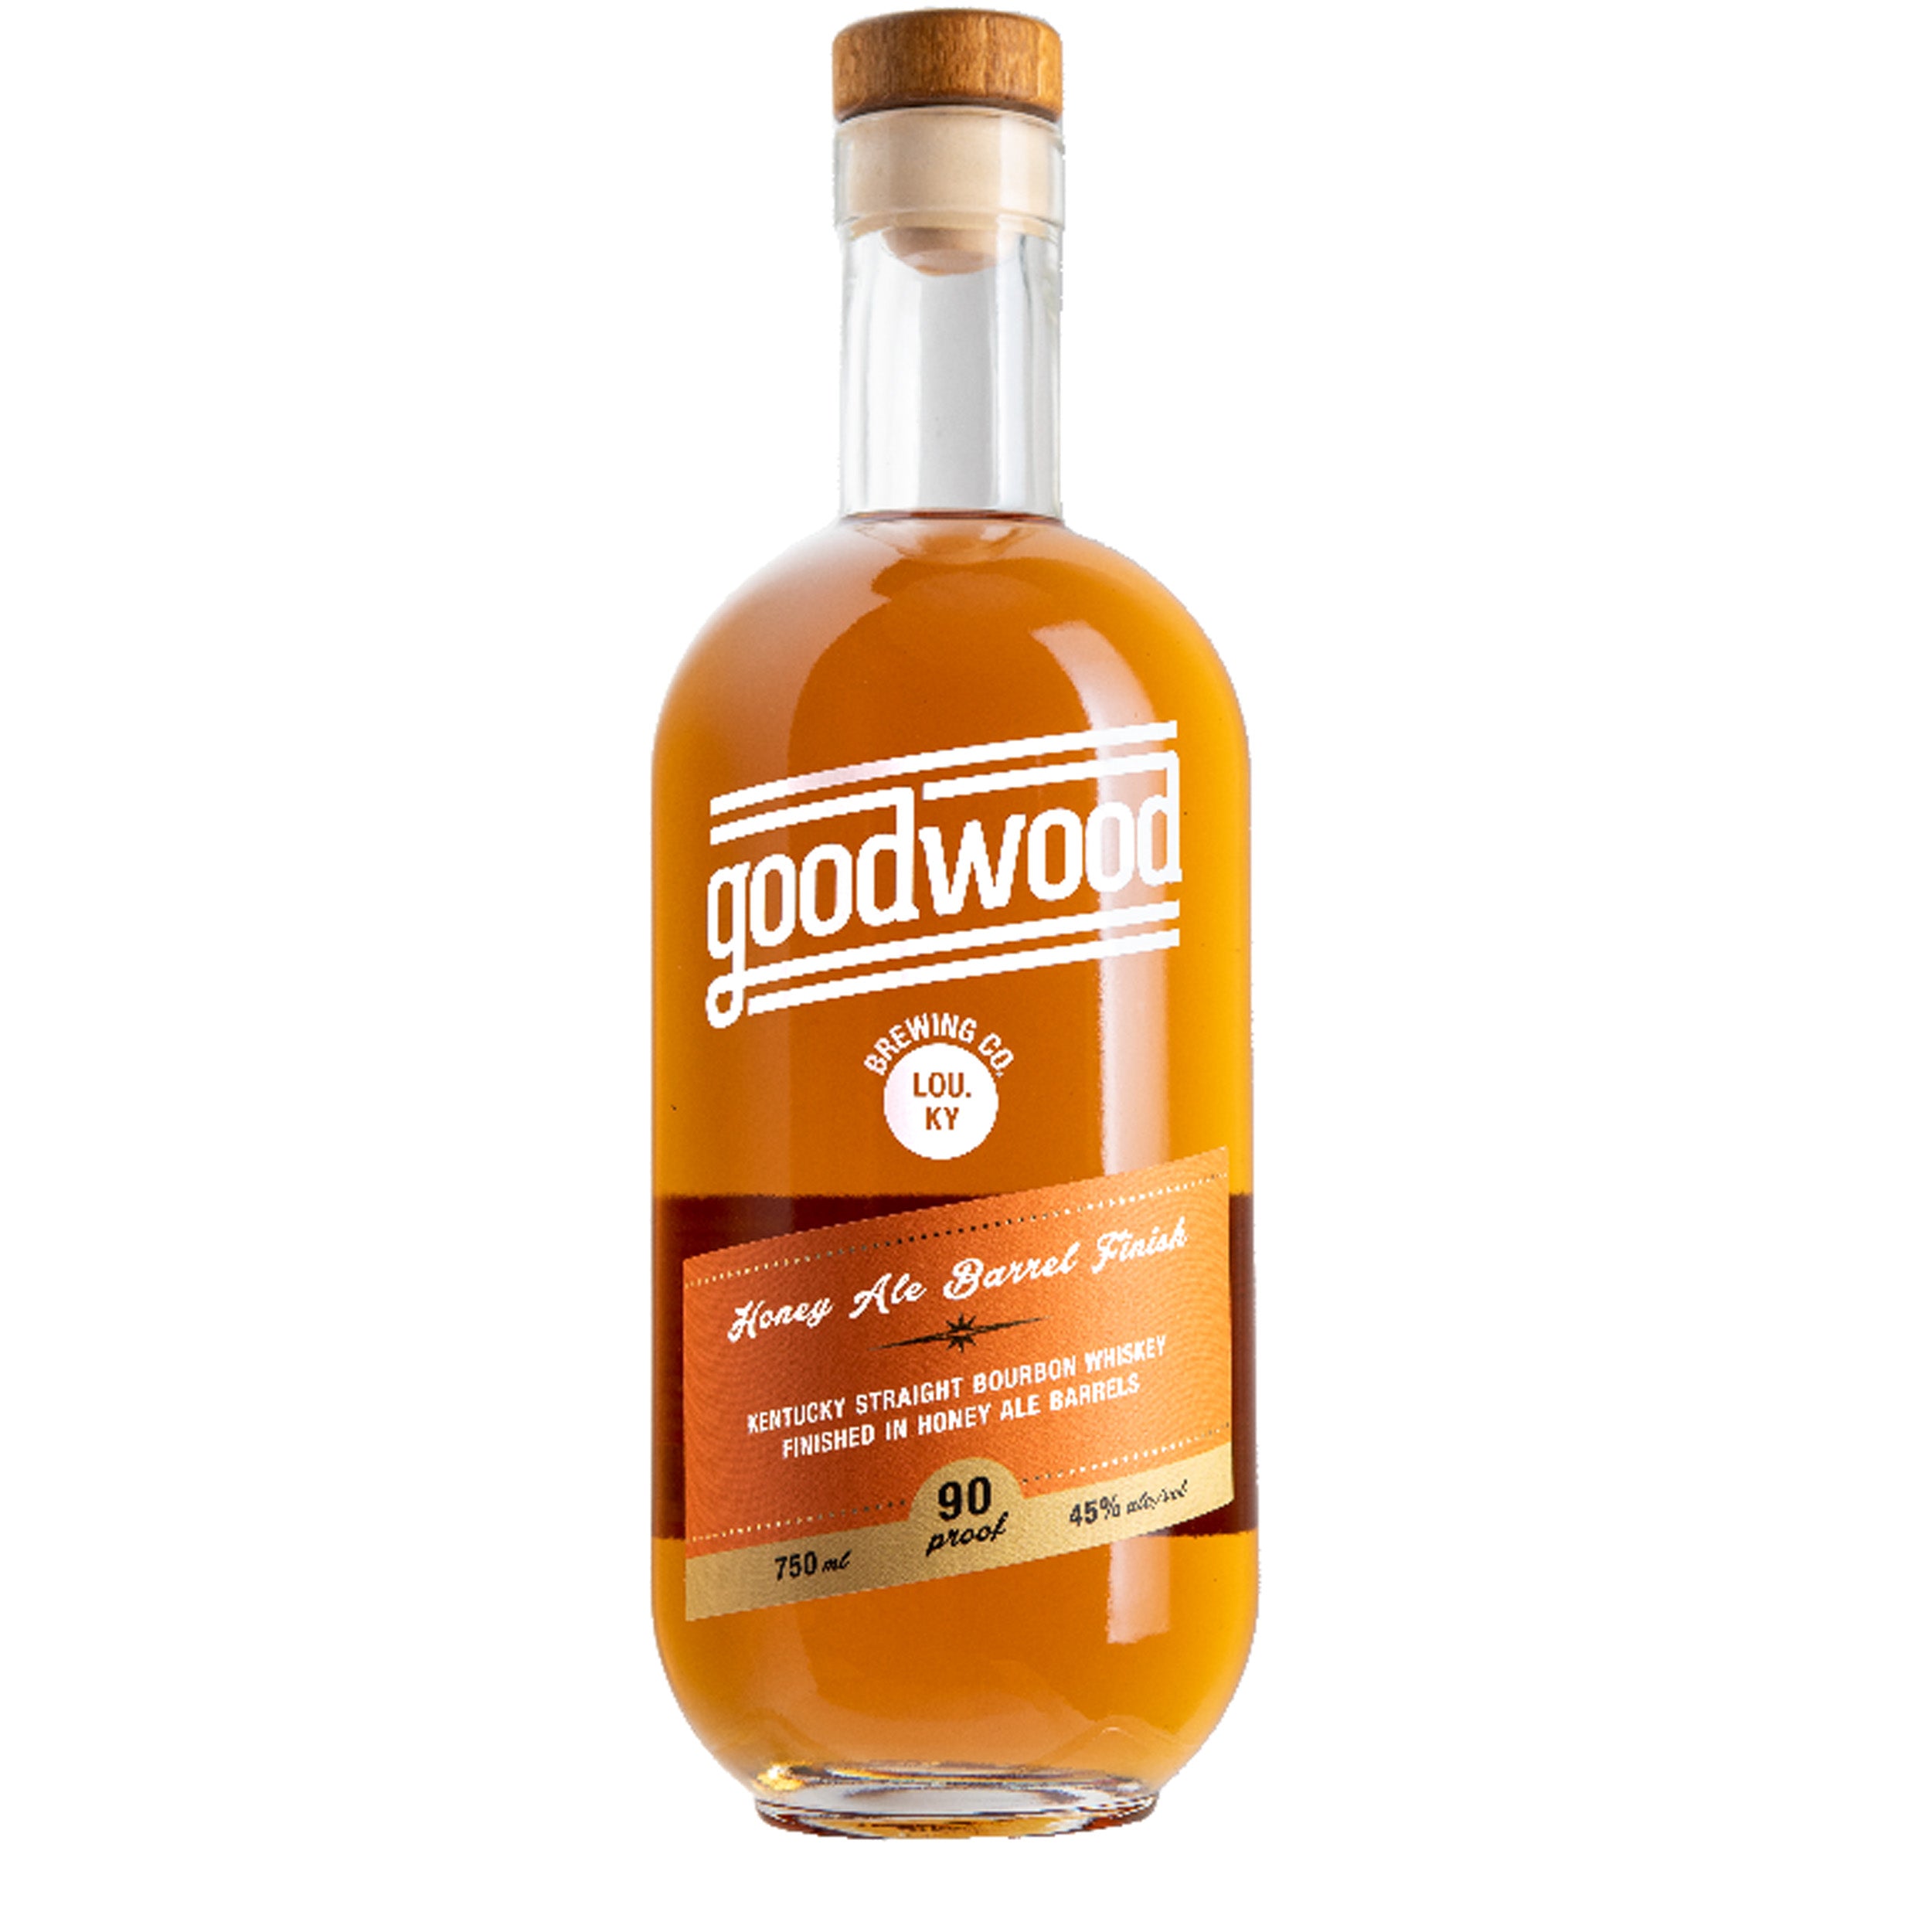 Goodwood Bourbon Honey Ale Finish